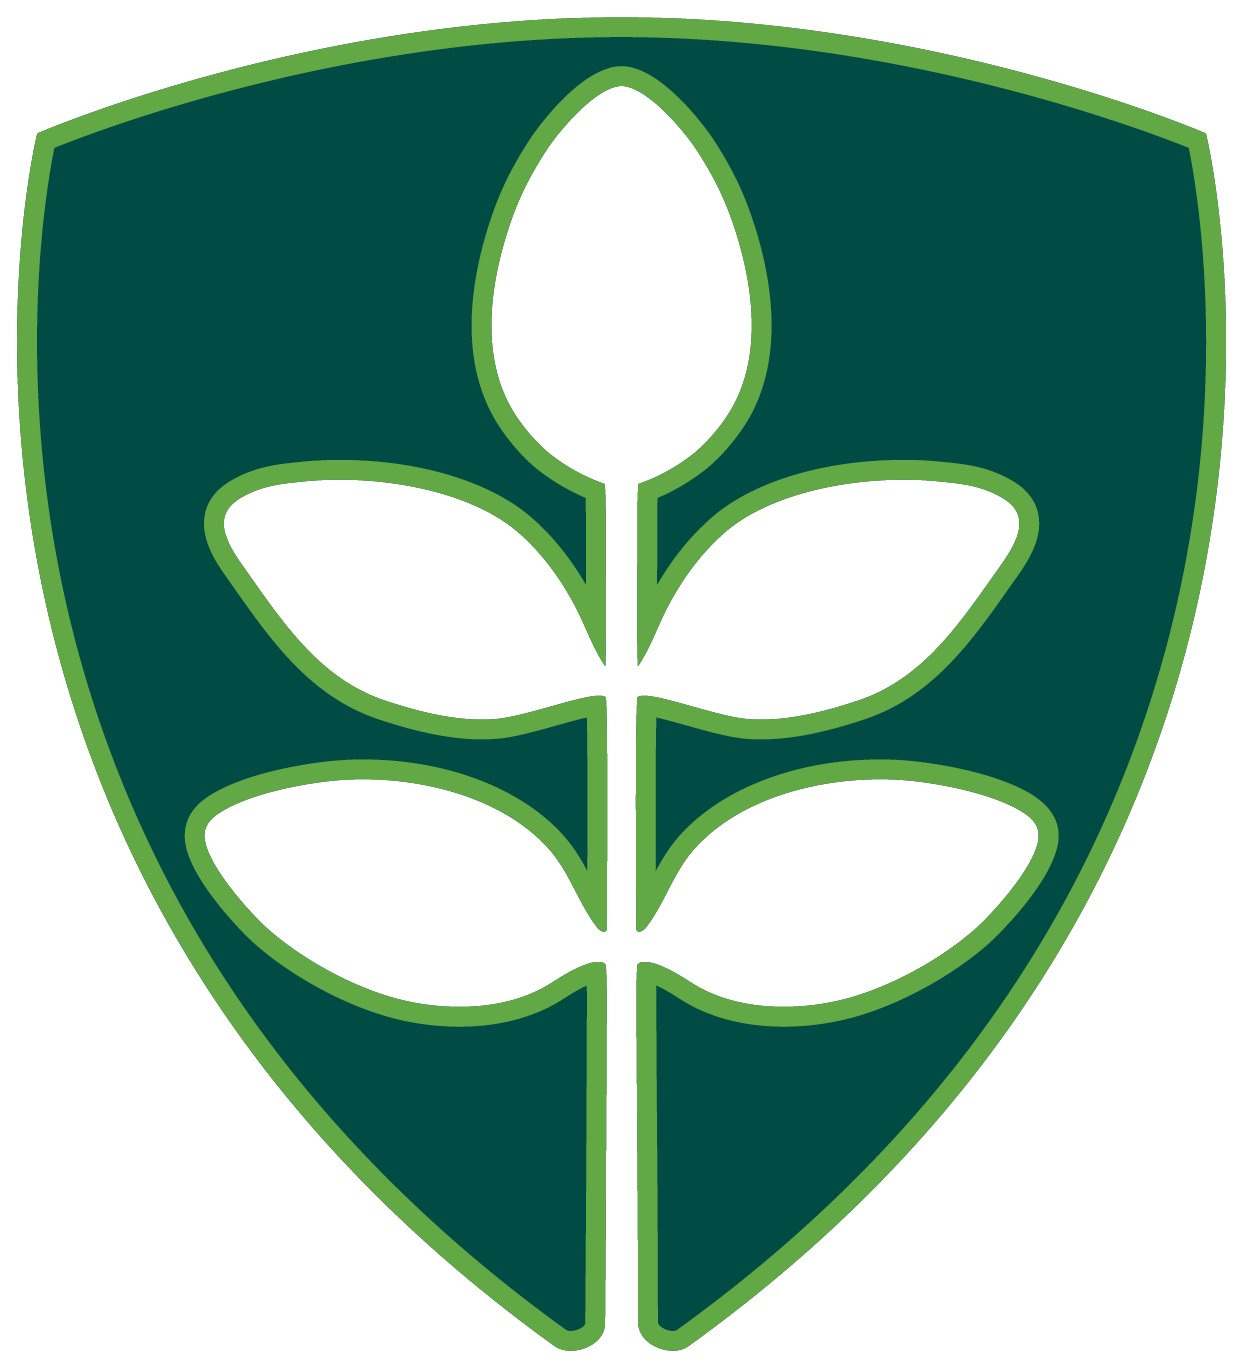 HarvesT Capital plant logo